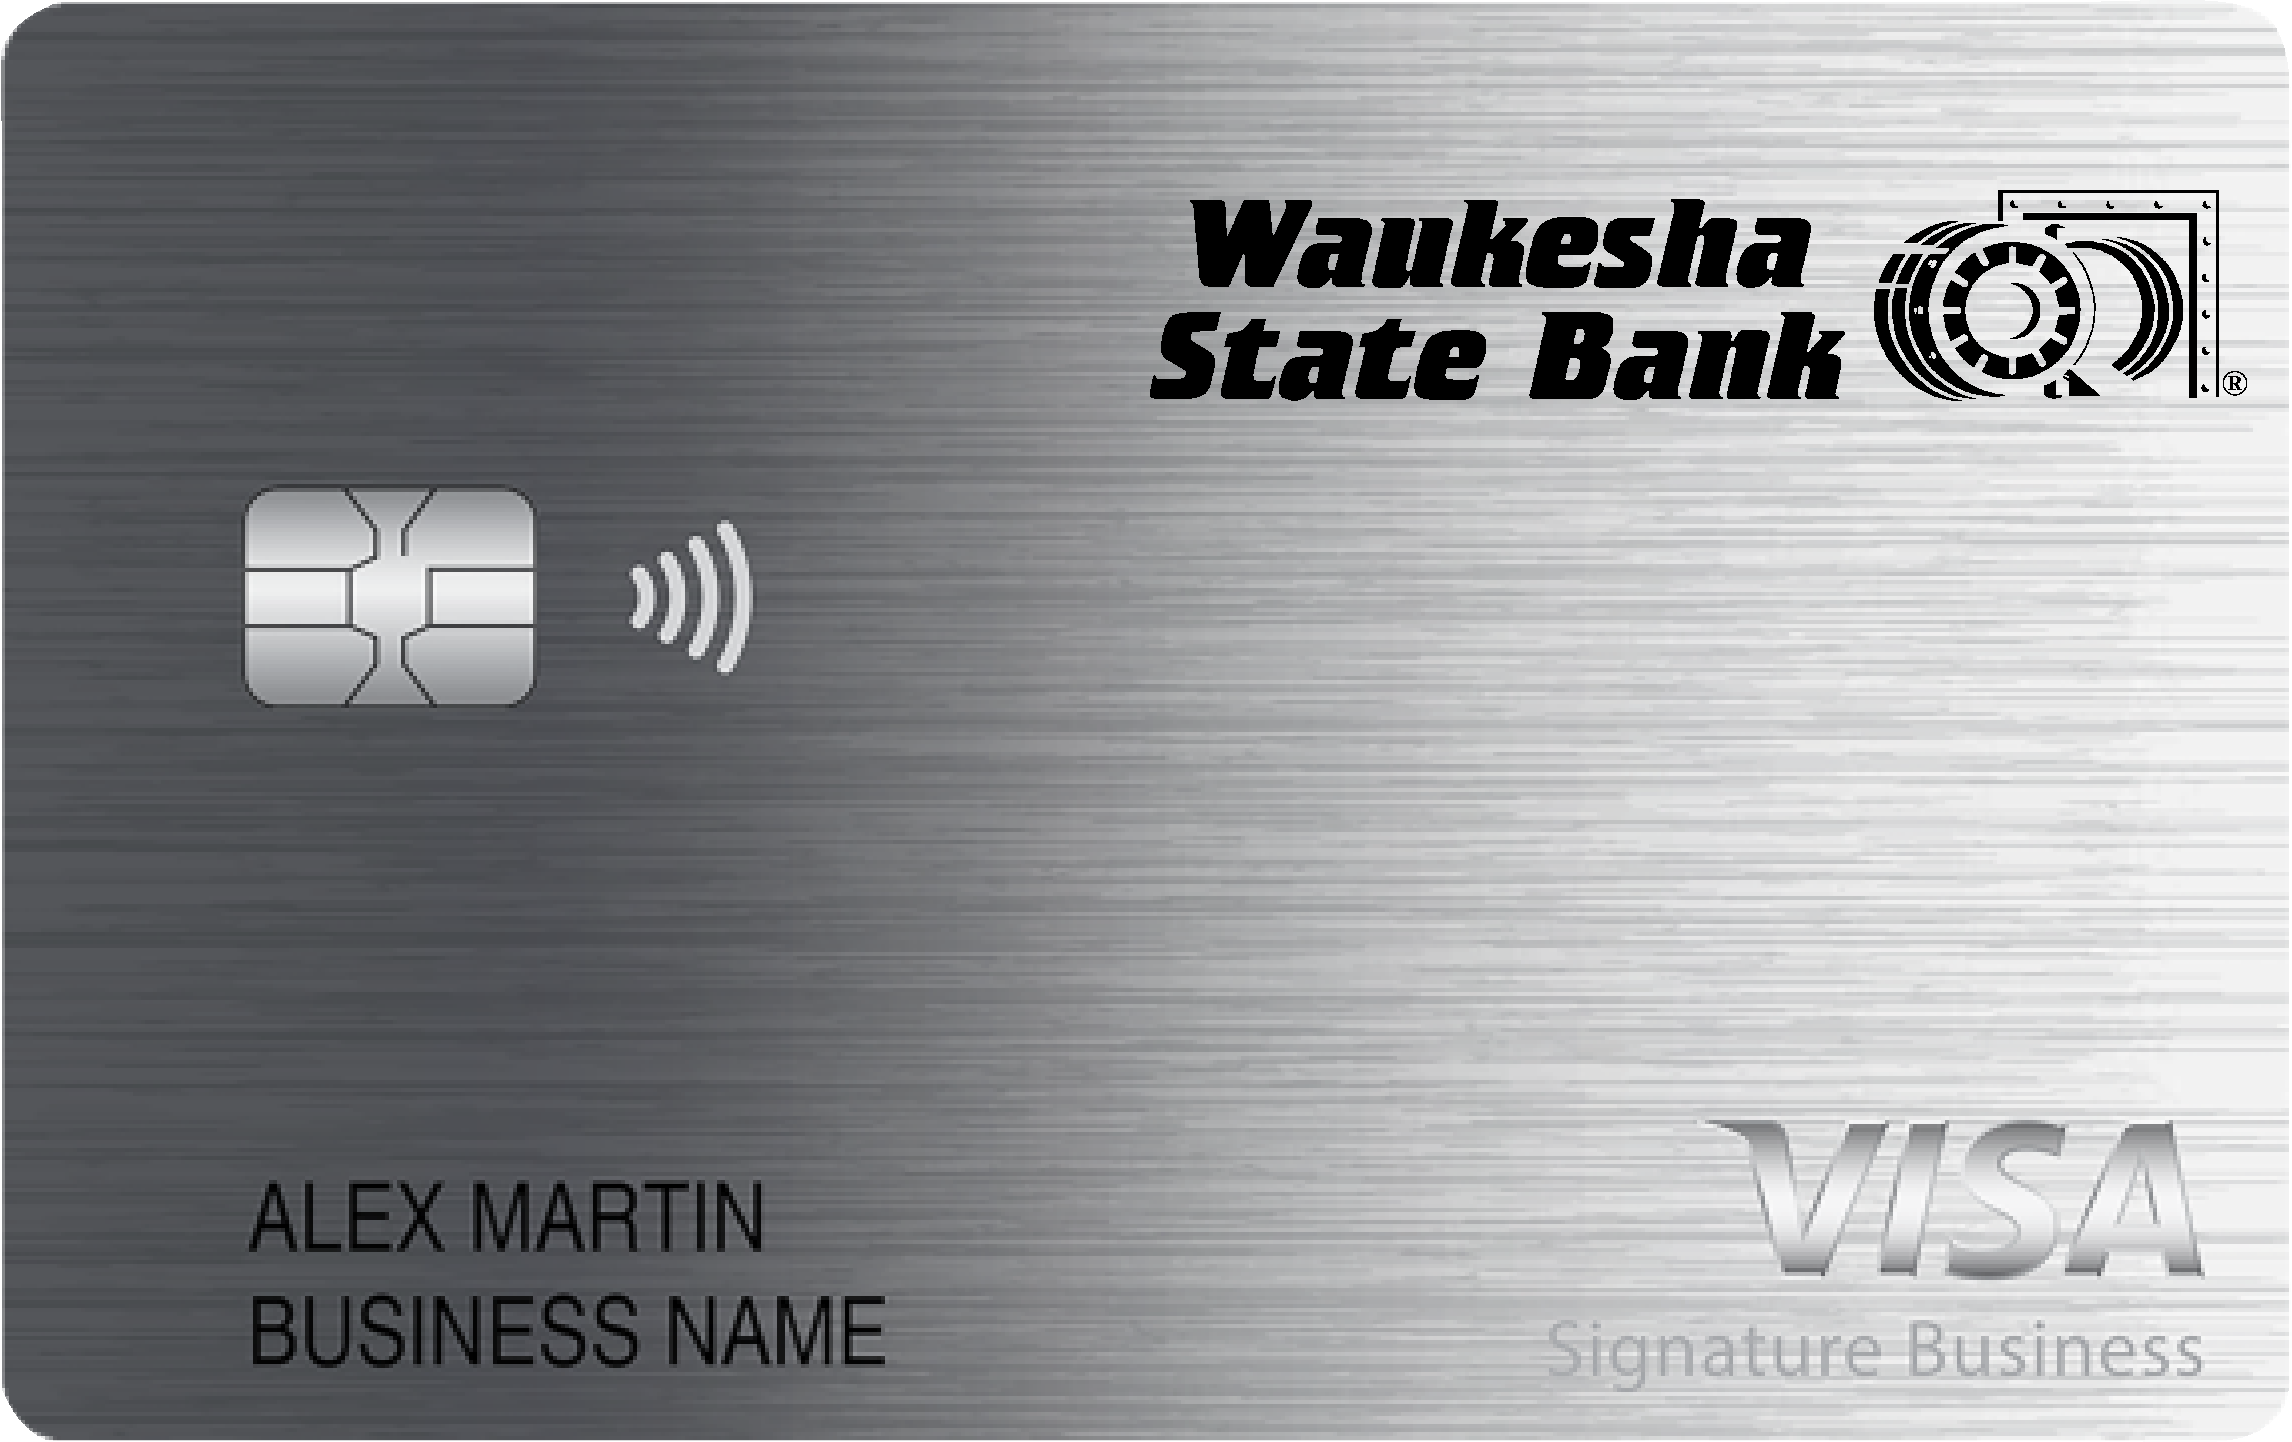 Waukesha State Bank Smart Business Rewards Card